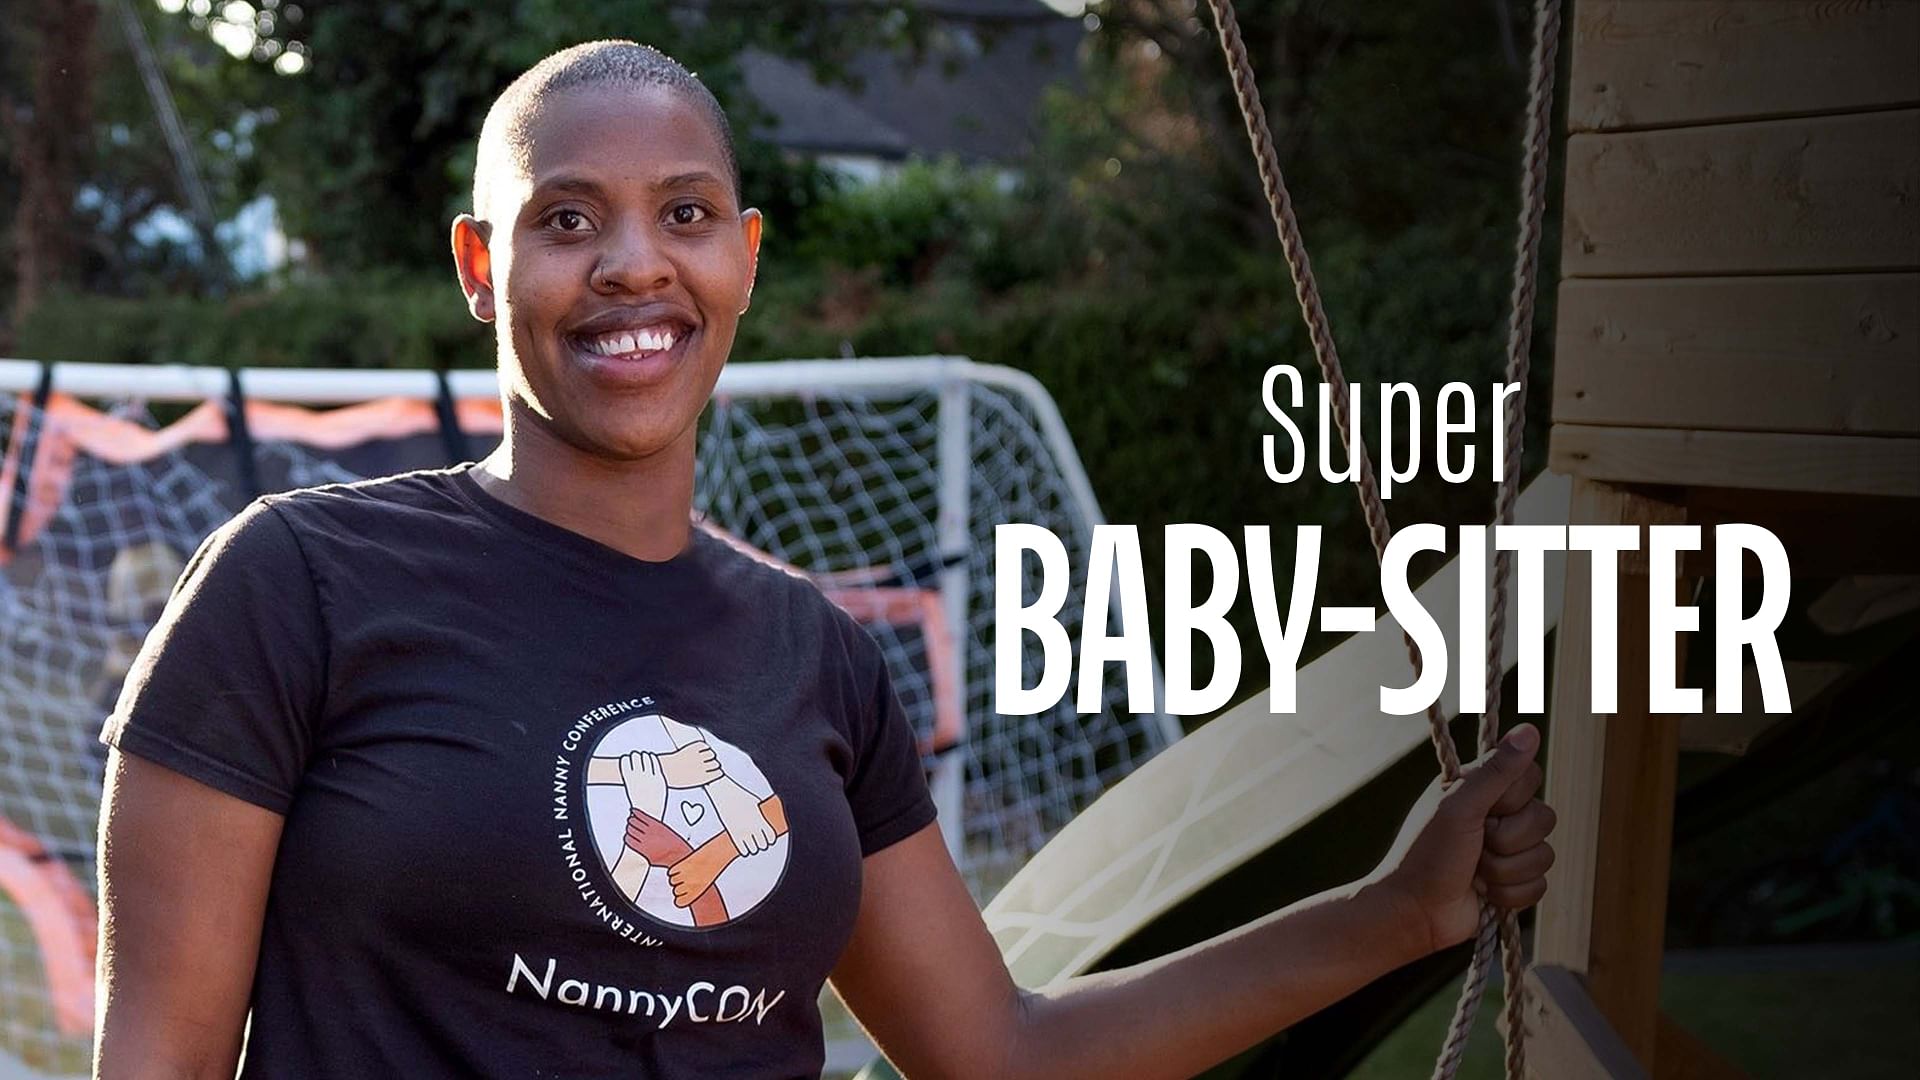 Re: sguardi sulla società - "Super-Nanny": babysitter d'élite in Gran Bretagna